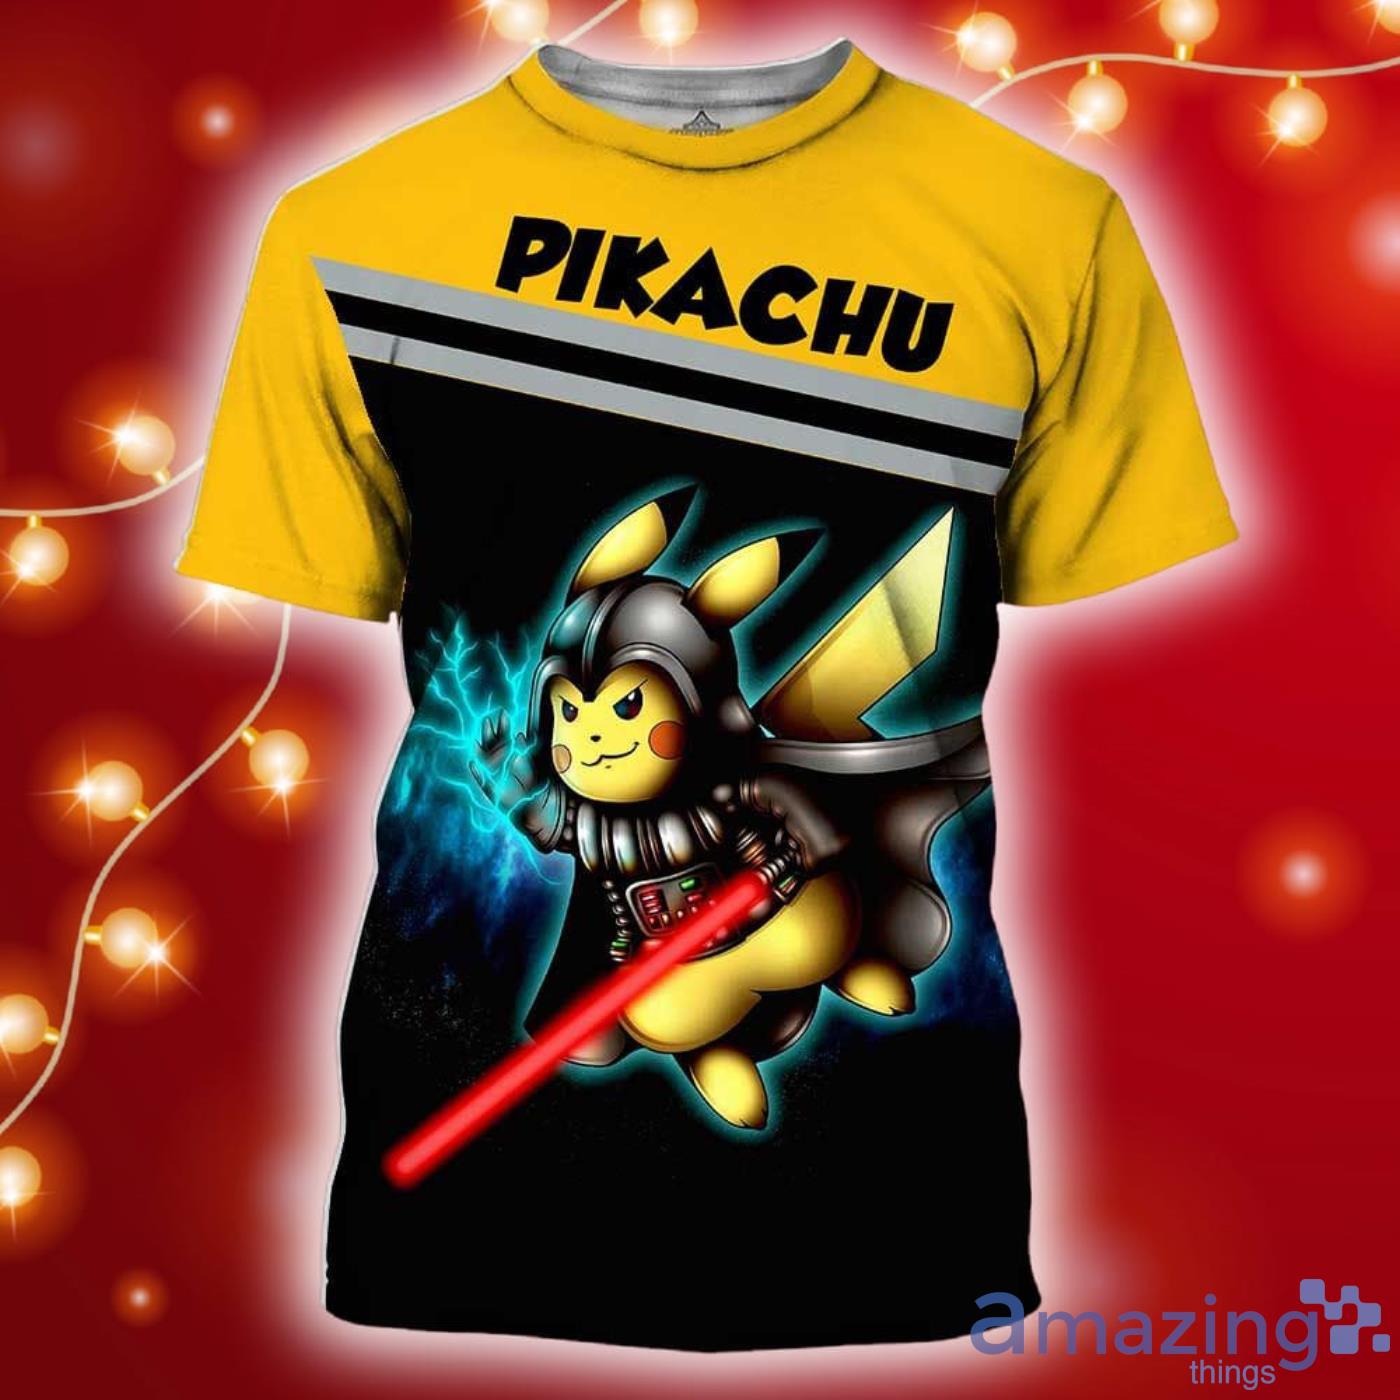 Pikachu Star Wars Pokemon All Over Print 3D Shirt Product Photo 1